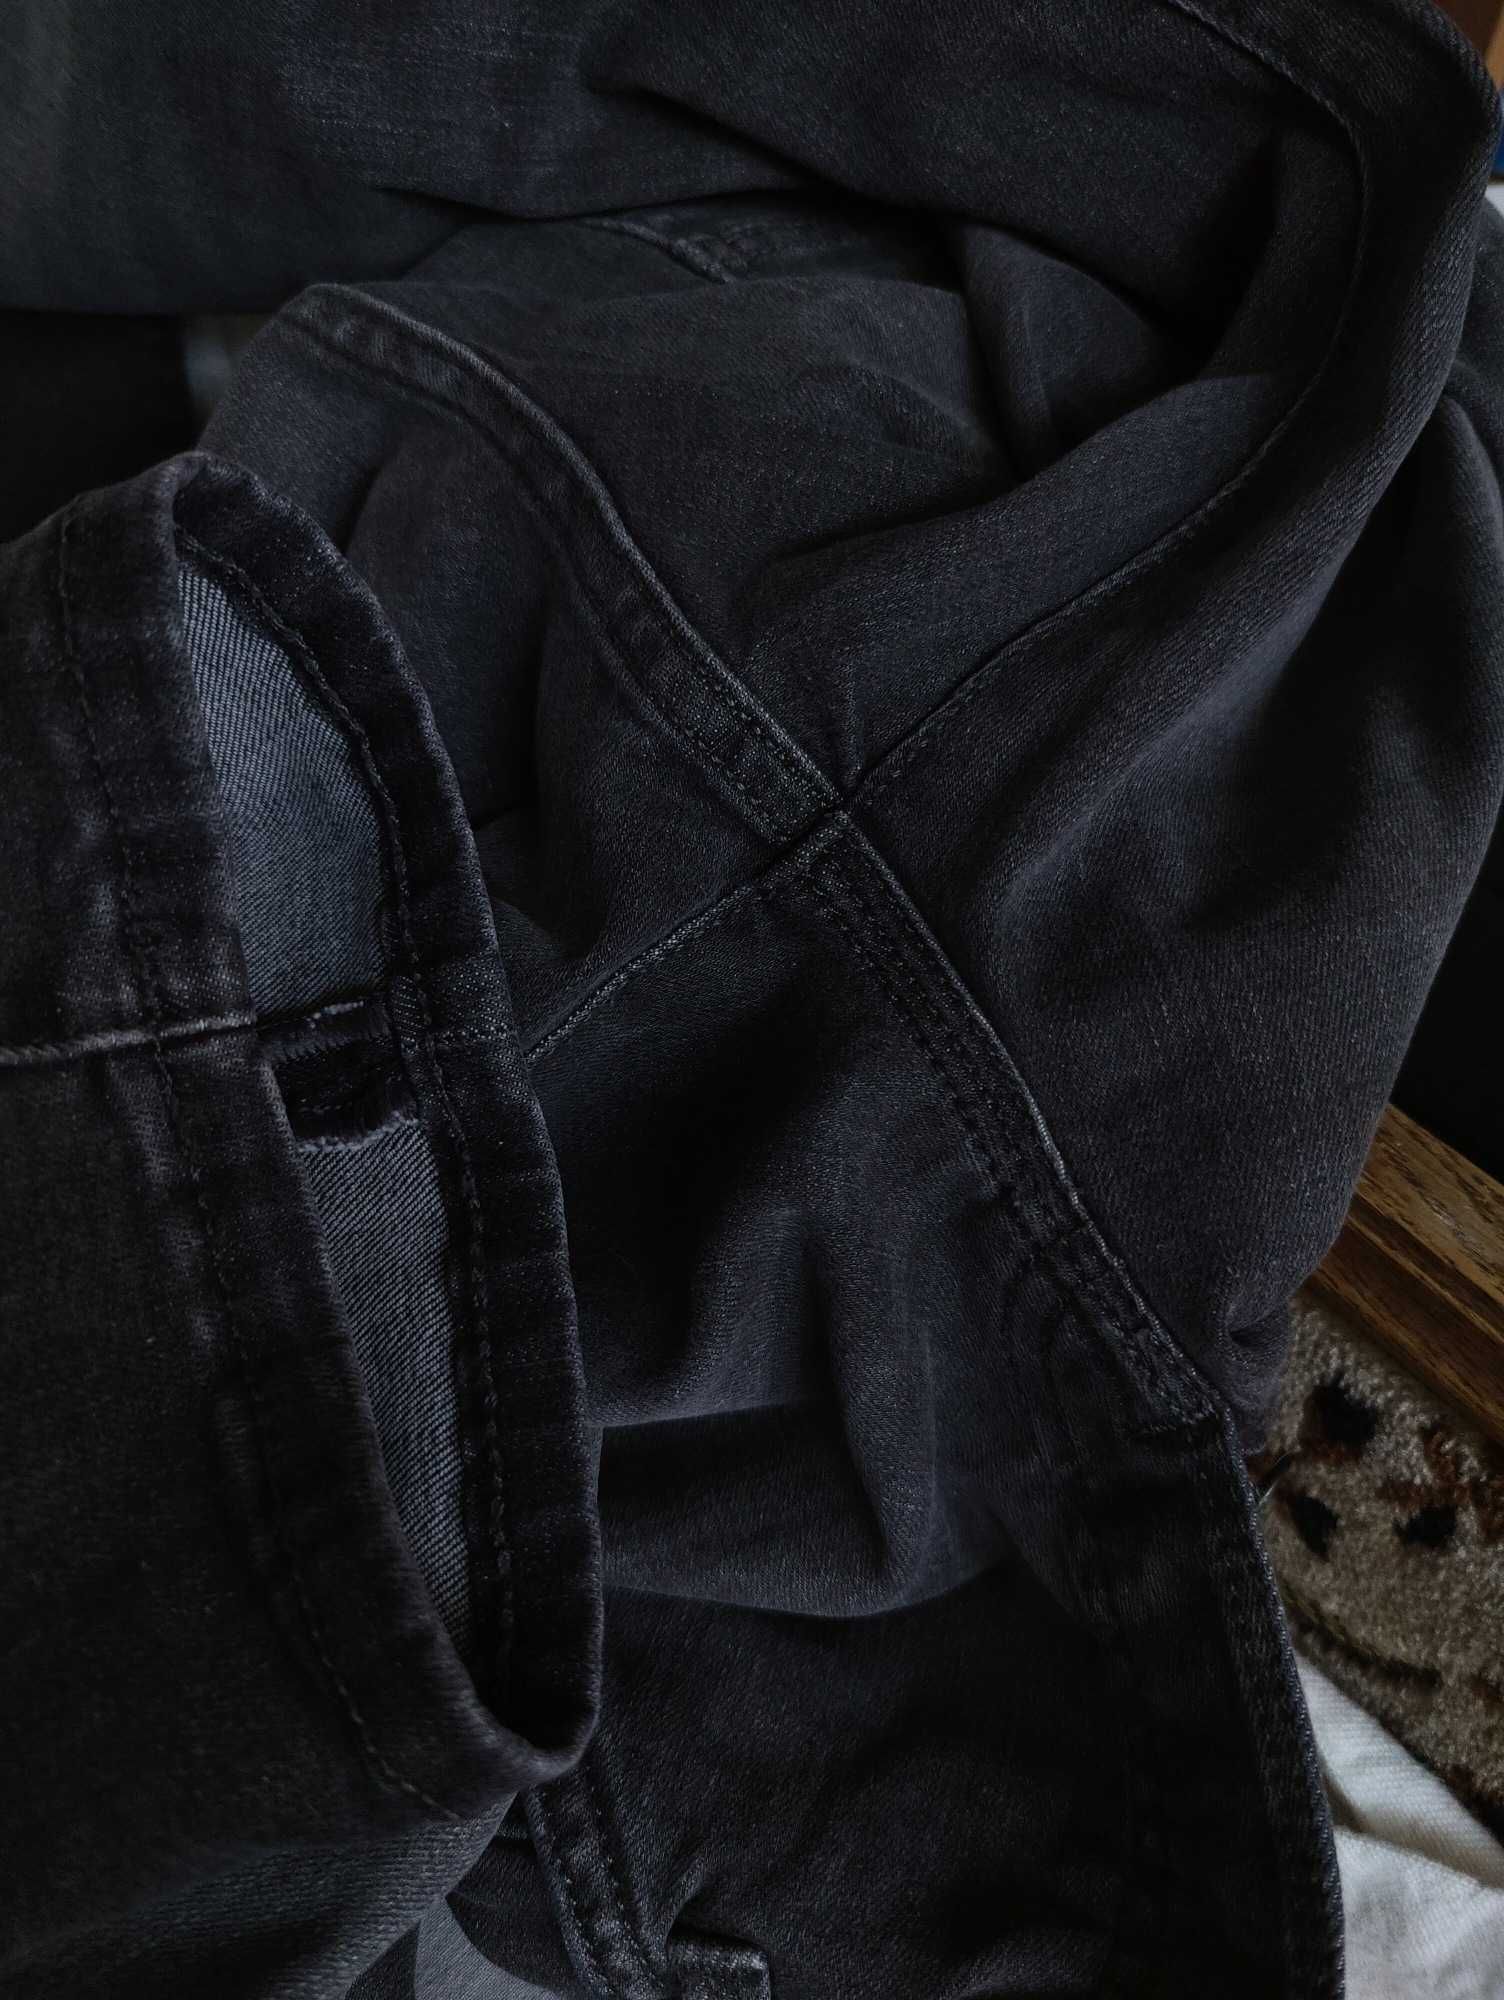 Джинсы Jack&jones Glenn jeans Дания w29 stretch grey.